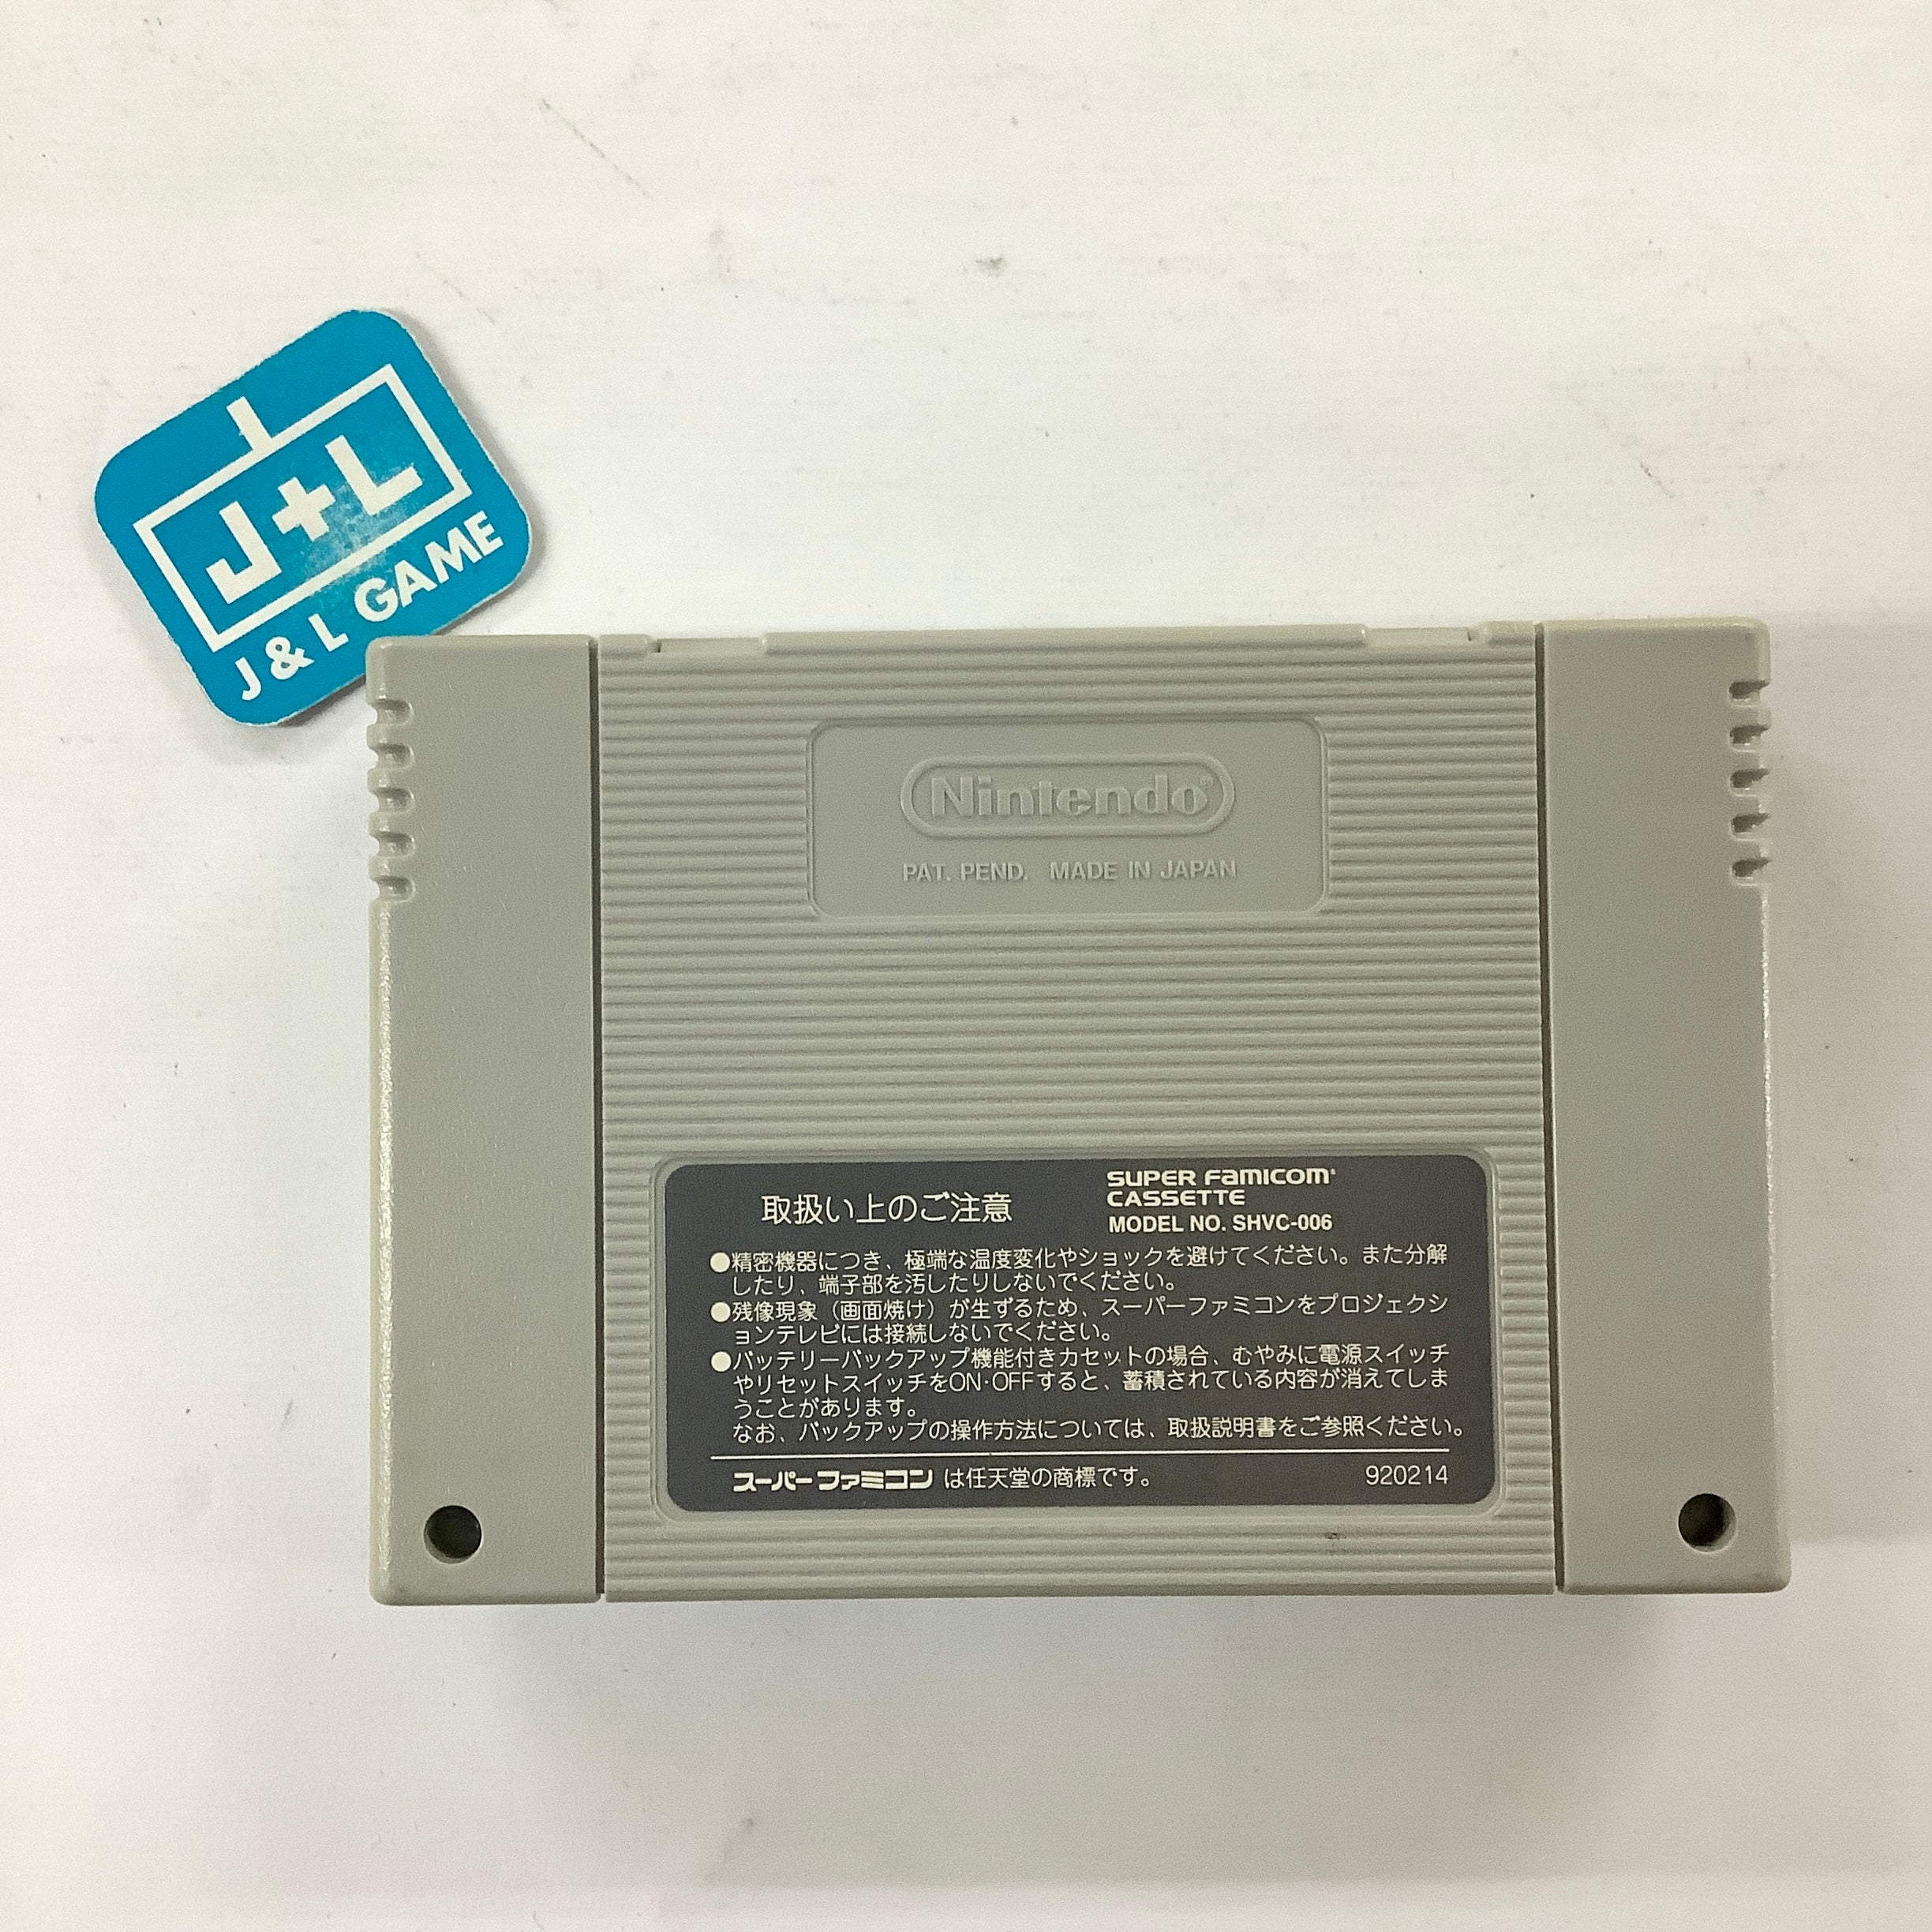 Shijou Saikyou League Serie A: Ace Striker - (SFC) Super Famicom [Pre-Owned] (Japanese Import) Video Games TNN   